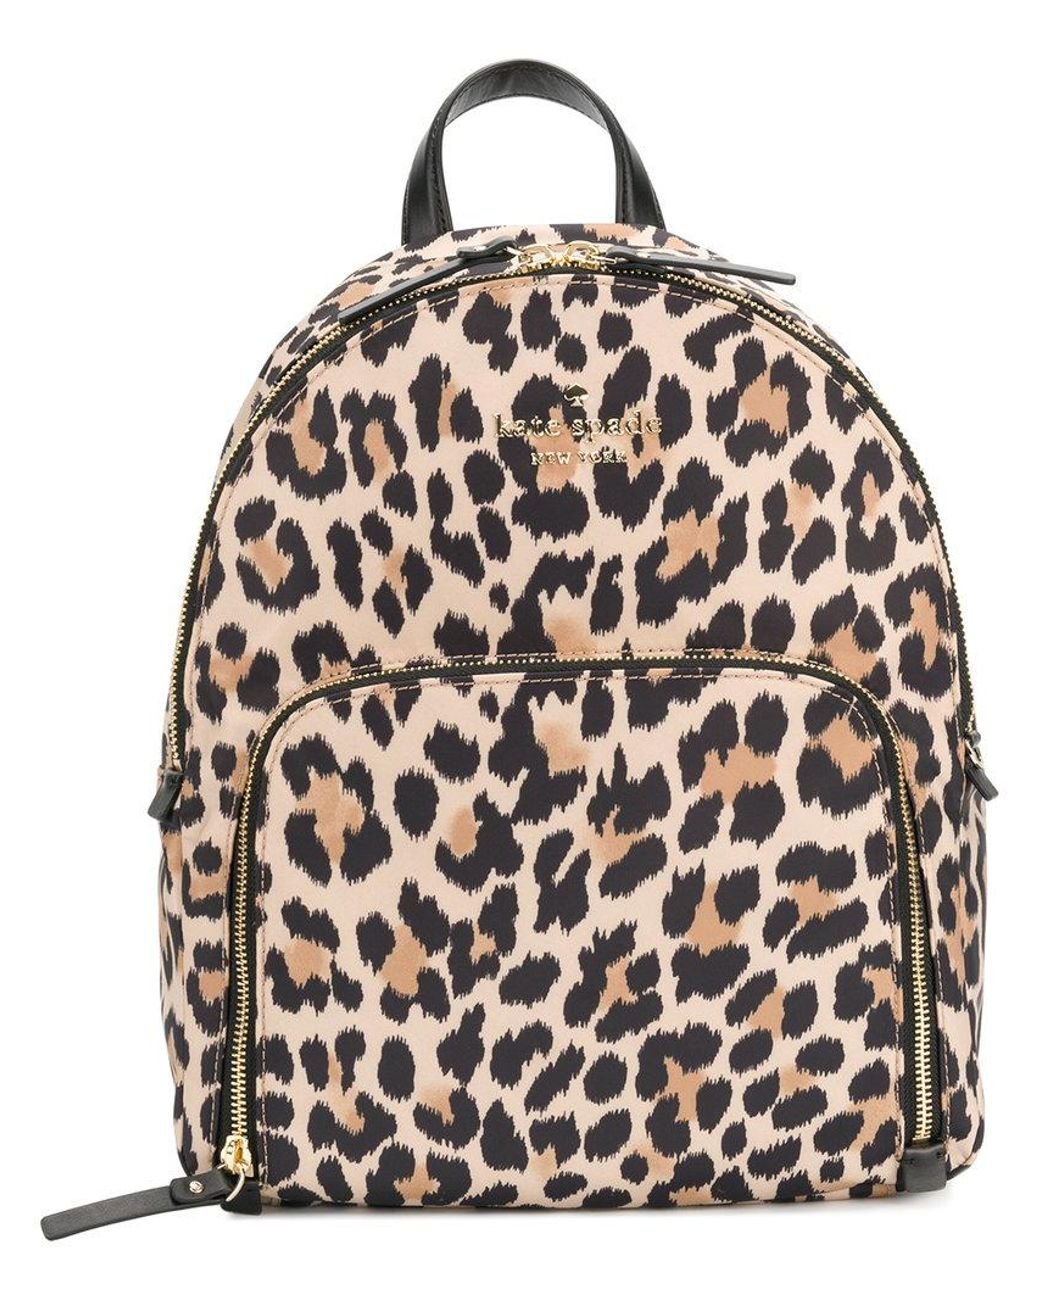 Total 50+ imagen kate spade cheetah backpack